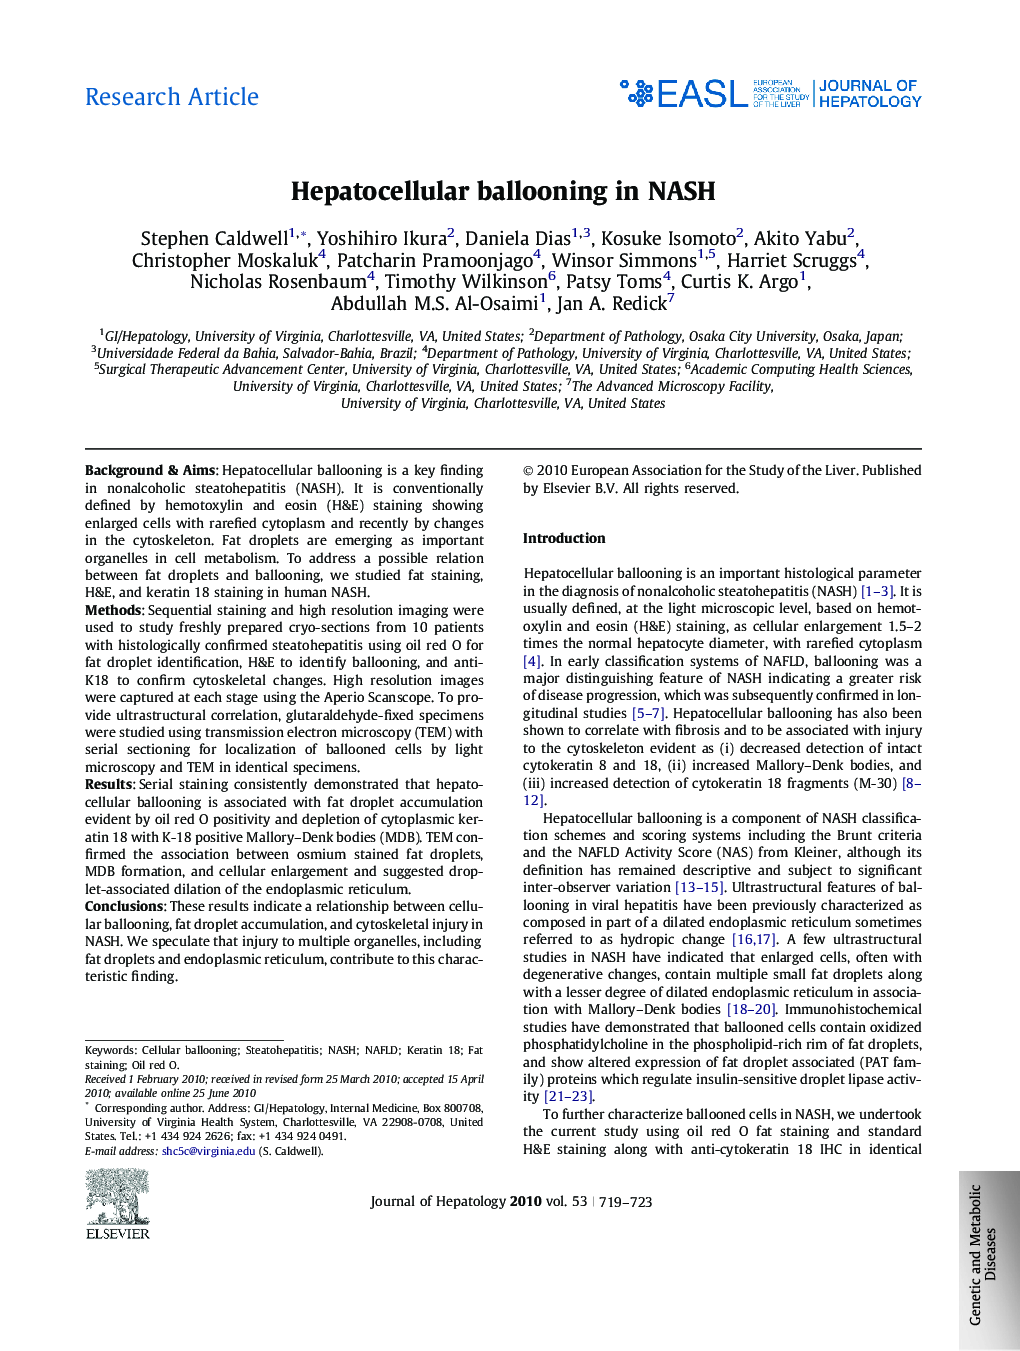 Research ArticleHepatocellular ballooning in NASH